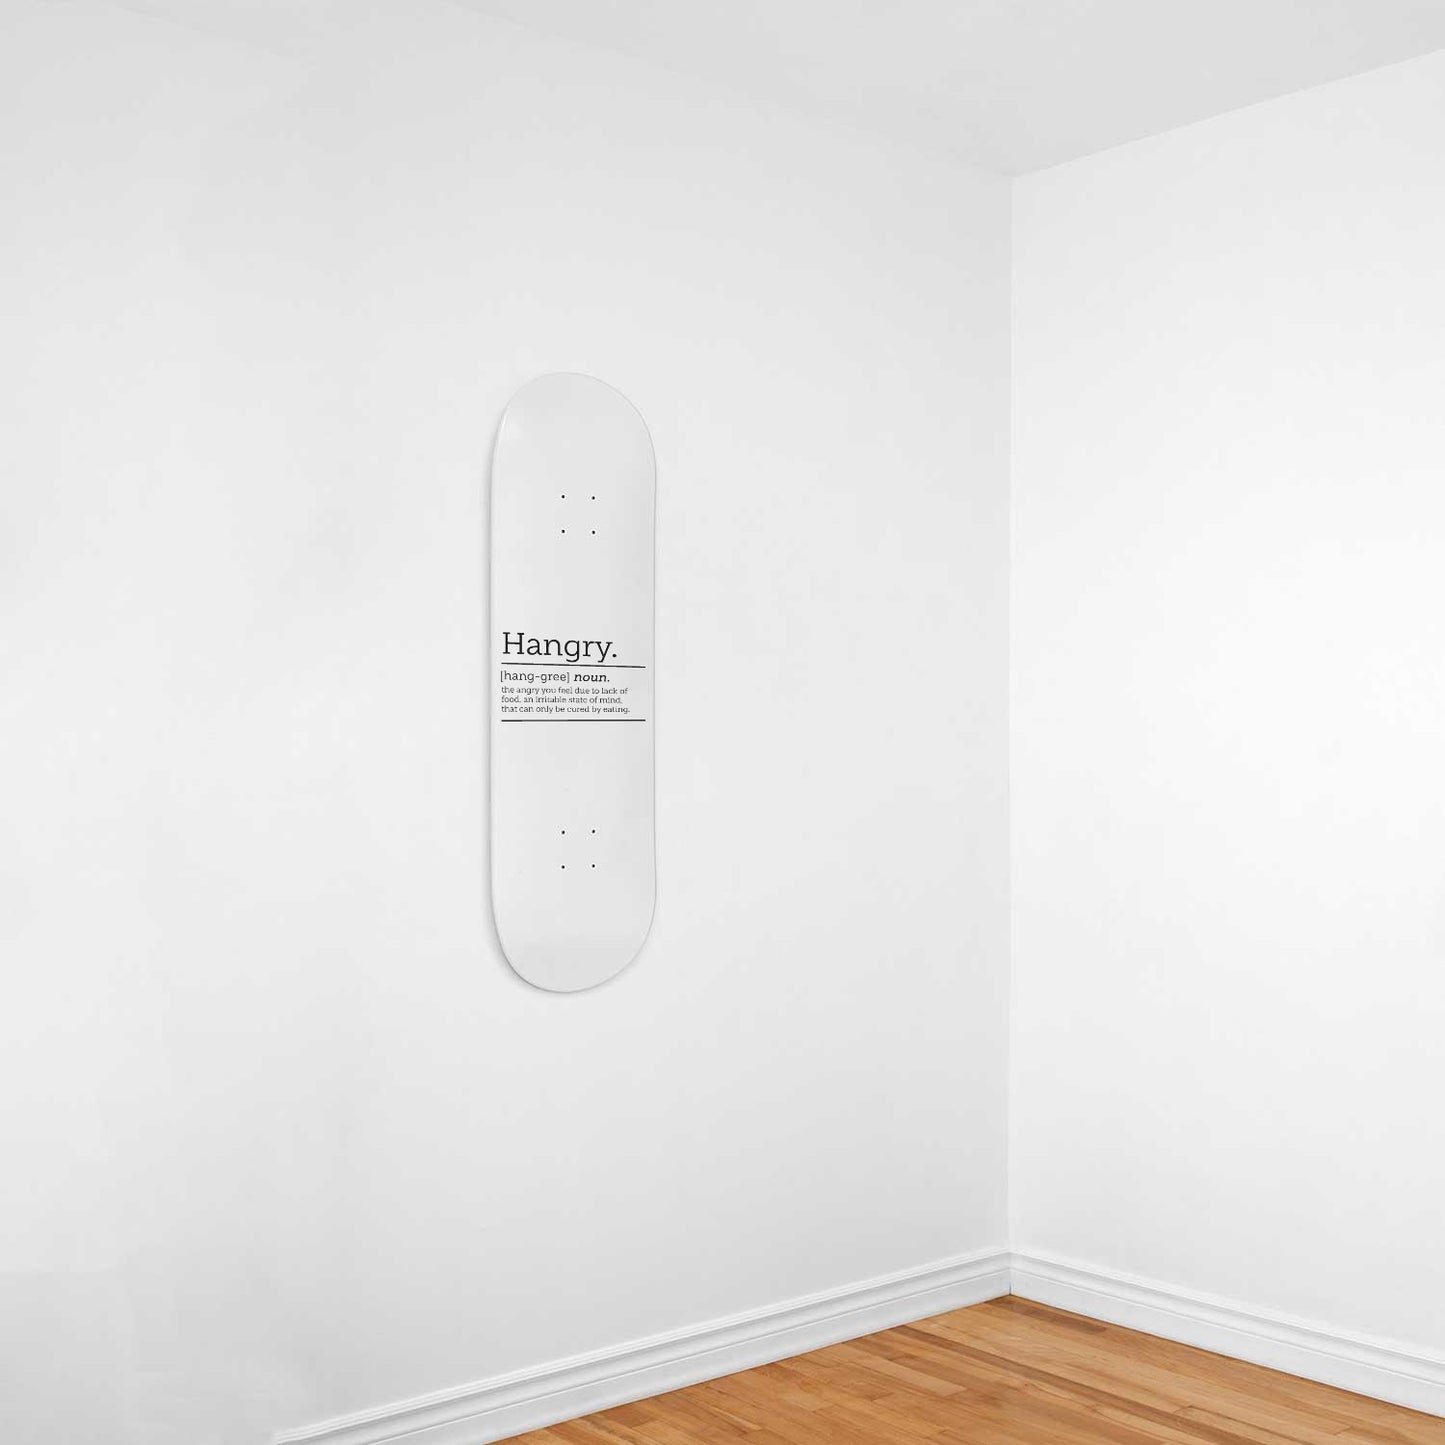 Hangry Definition Wall Decor - White Skateboard Wall Art